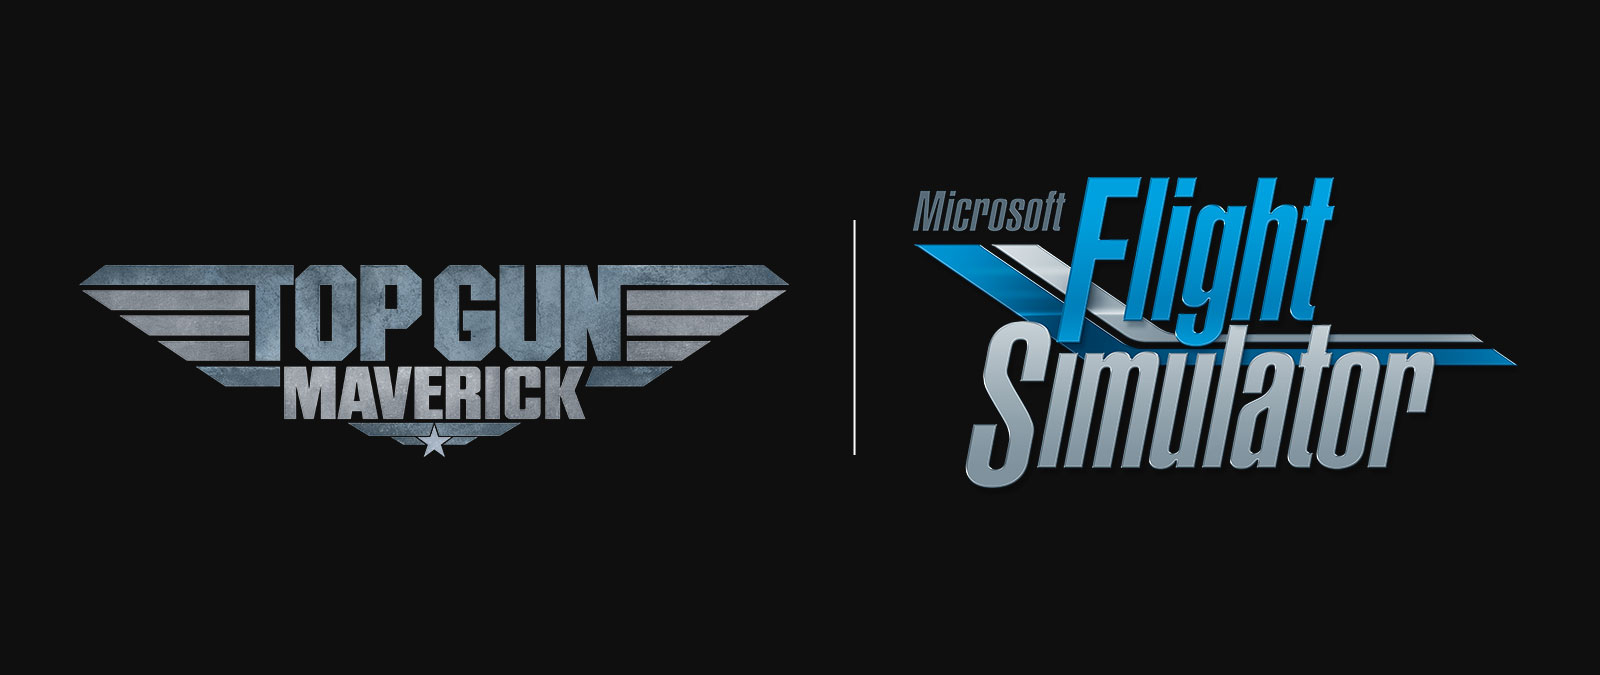 Microsoft Flight Simulator -logo ja Top Gun Maverick -logo